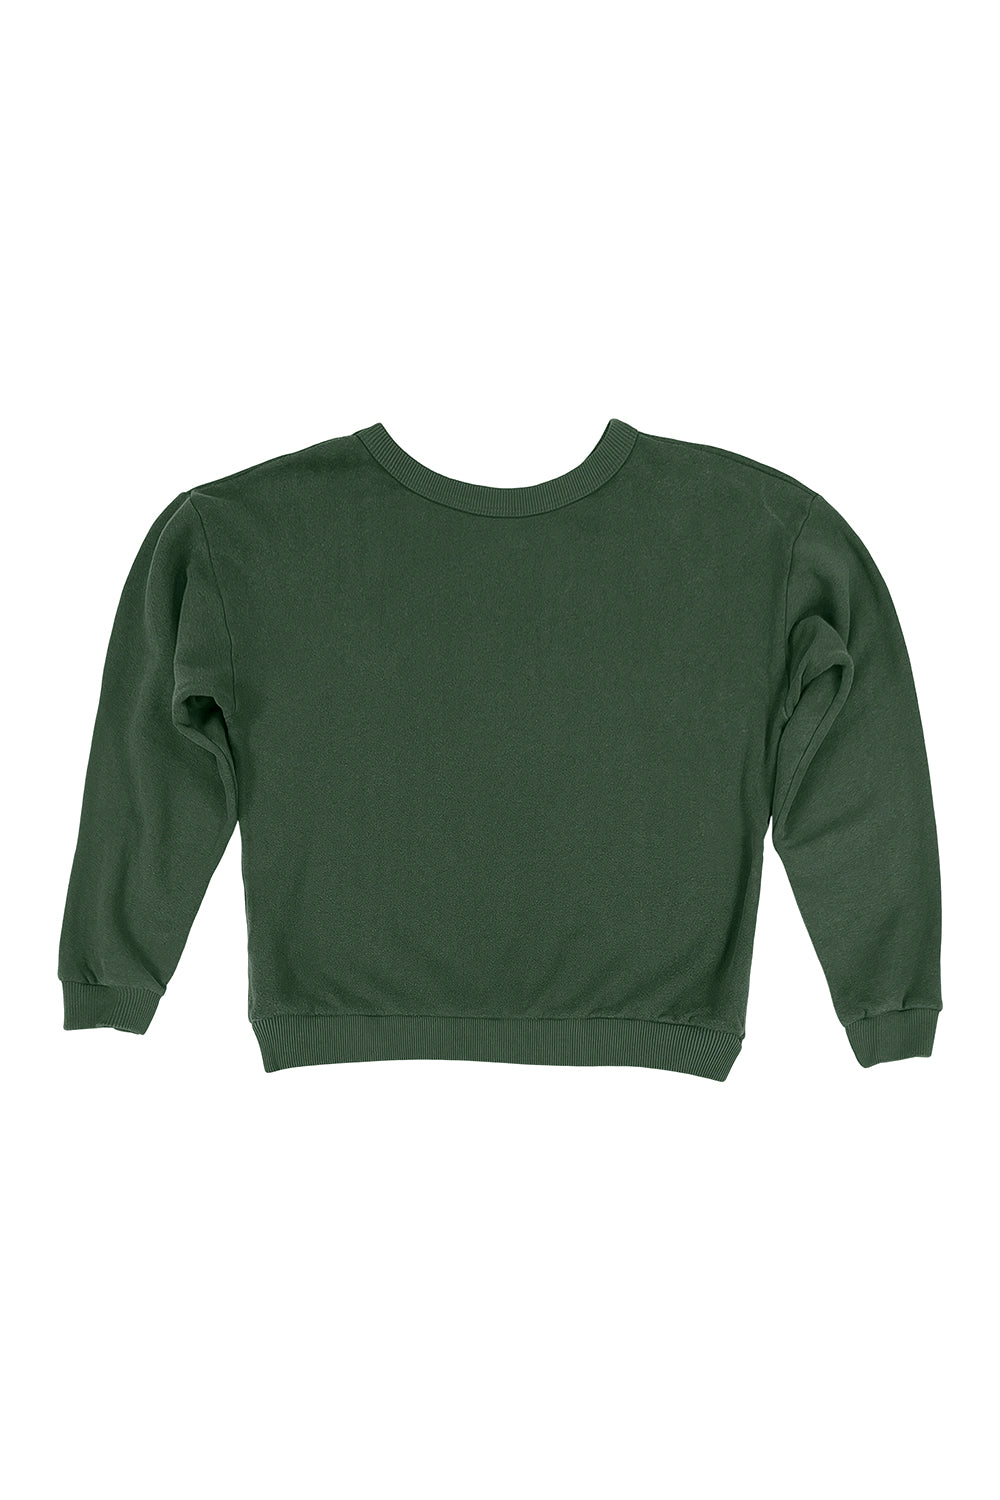 & Clothing Hemp Sweatshirt Cropped | Jungmaven Accessories Crux